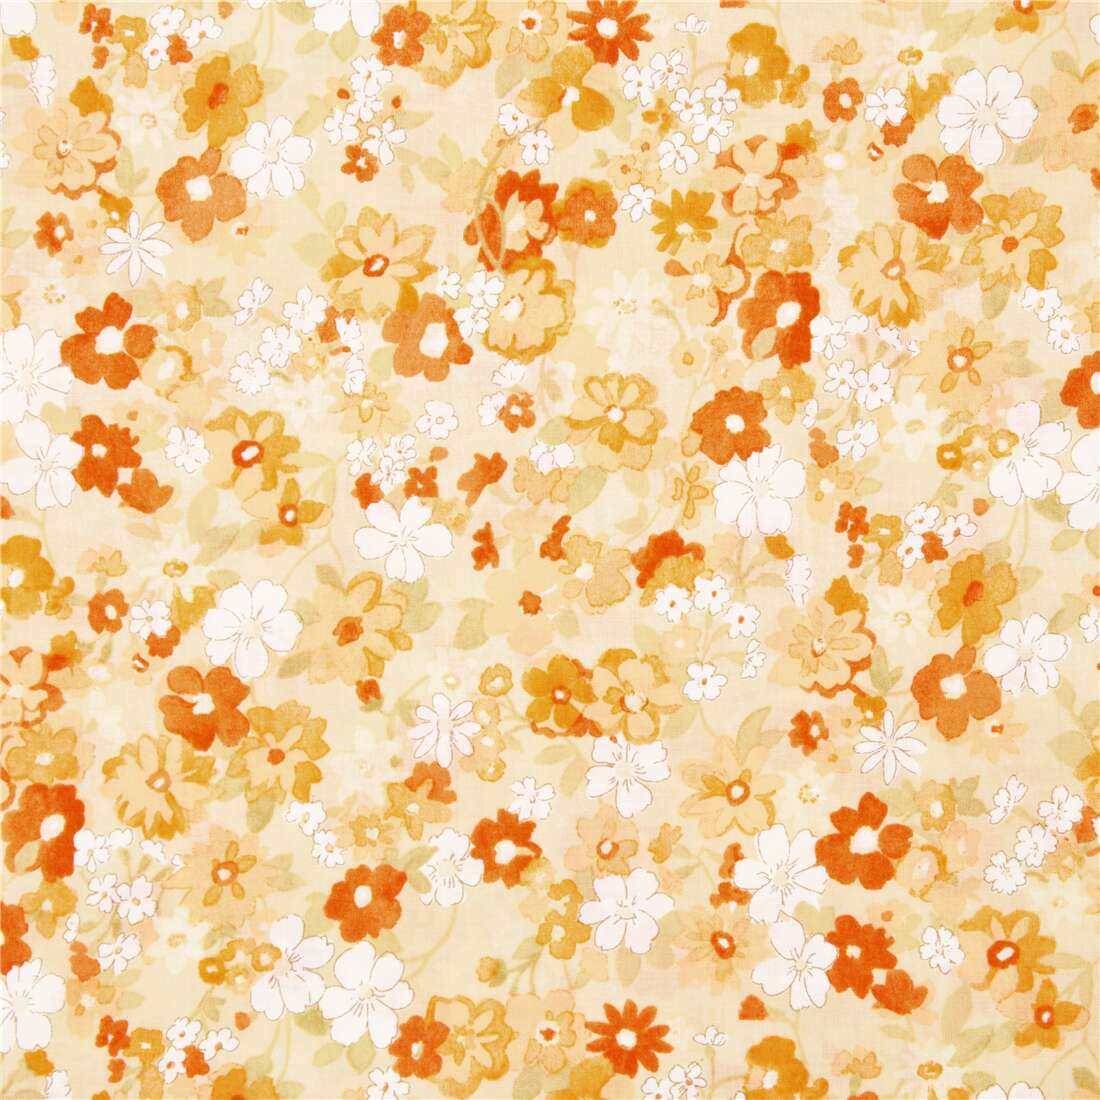 orange fabric pattern